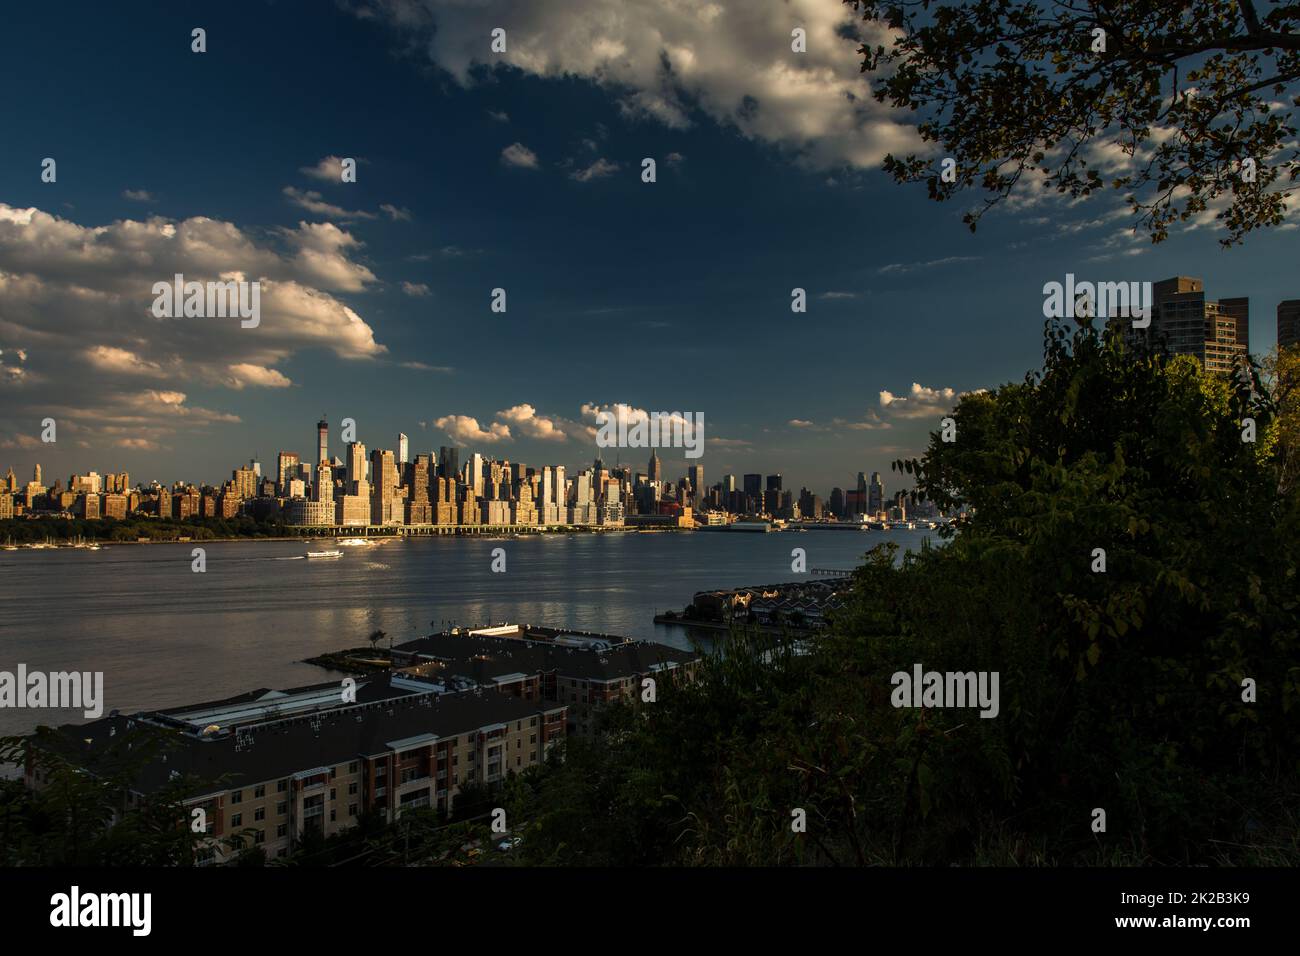 New York City NYC Manhattan Downtown Skyline, viewed from Jersey City, New Jersey, USA. Stock Photo